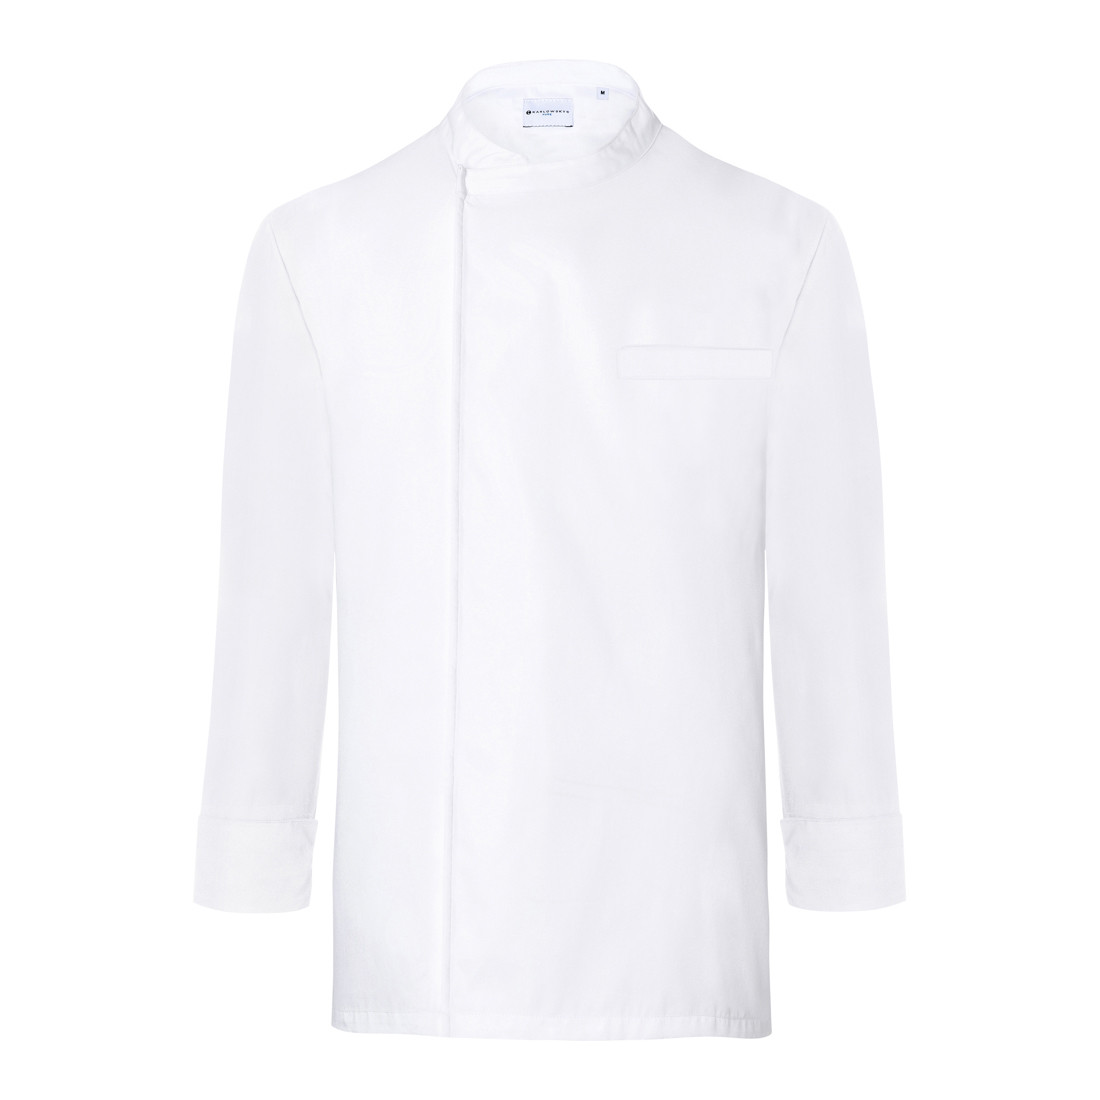 Camisa Basic para cocinero, manga larga - Ropa de protección